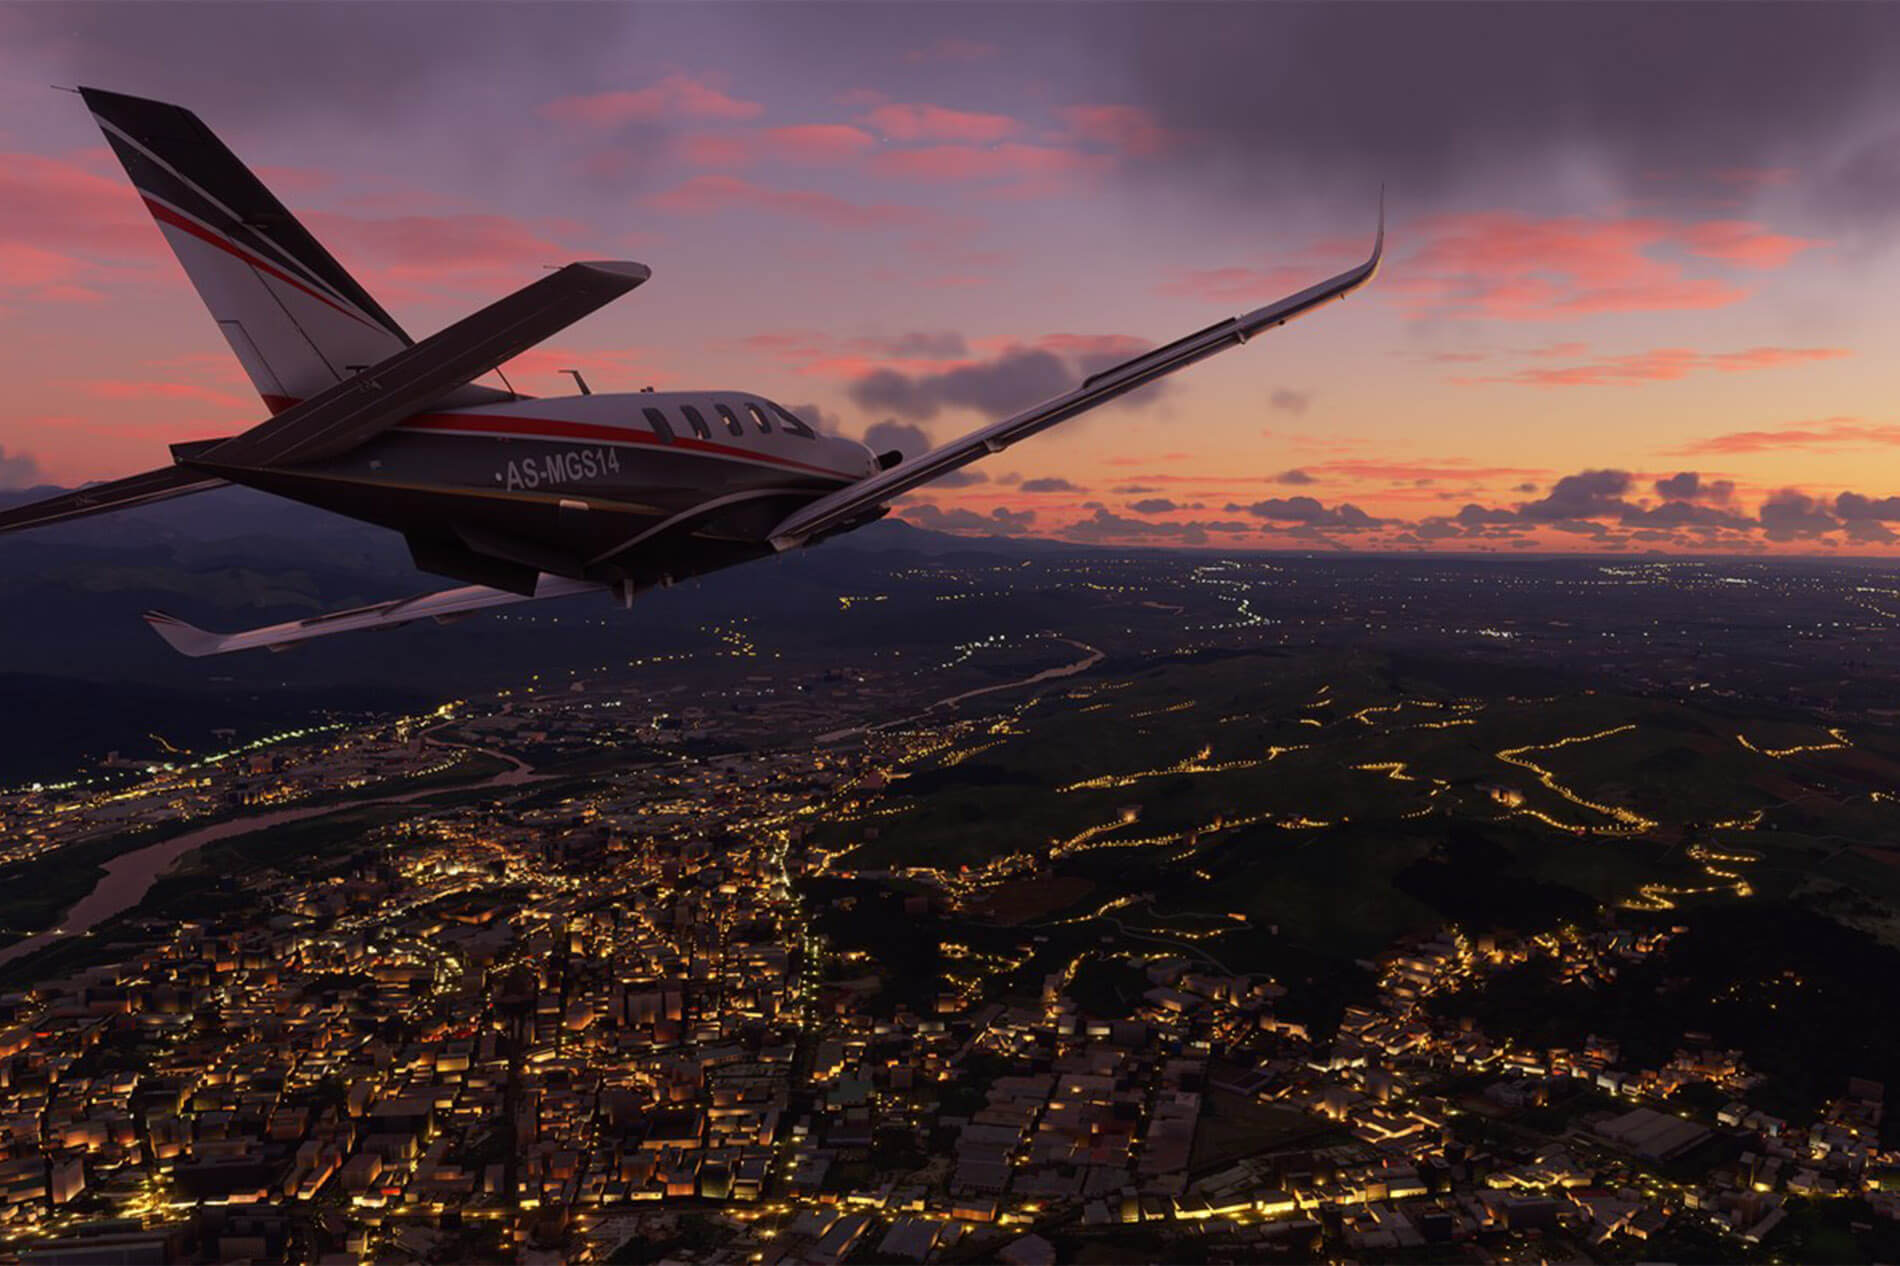 Microsoft Flight Simulator 2020: Cost, Size and Liveries